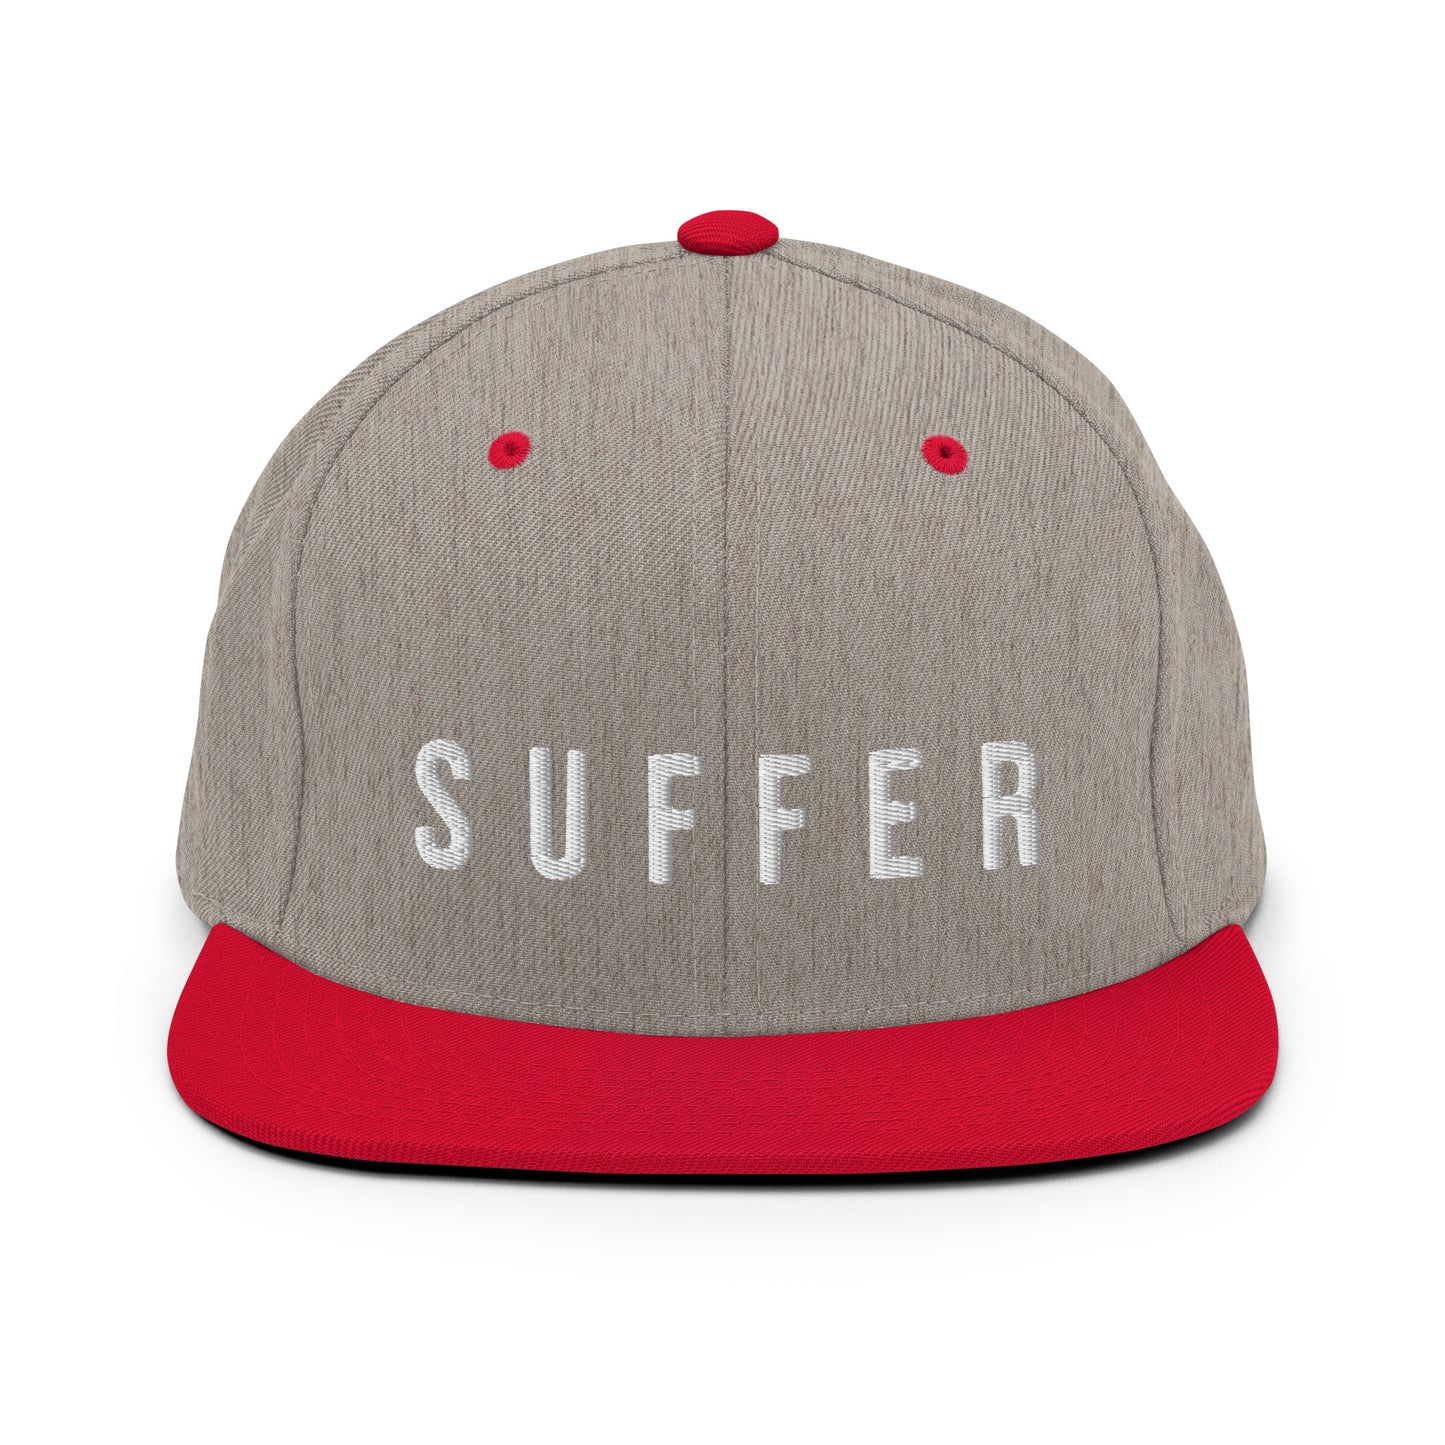 SUFFER Snapback Hat